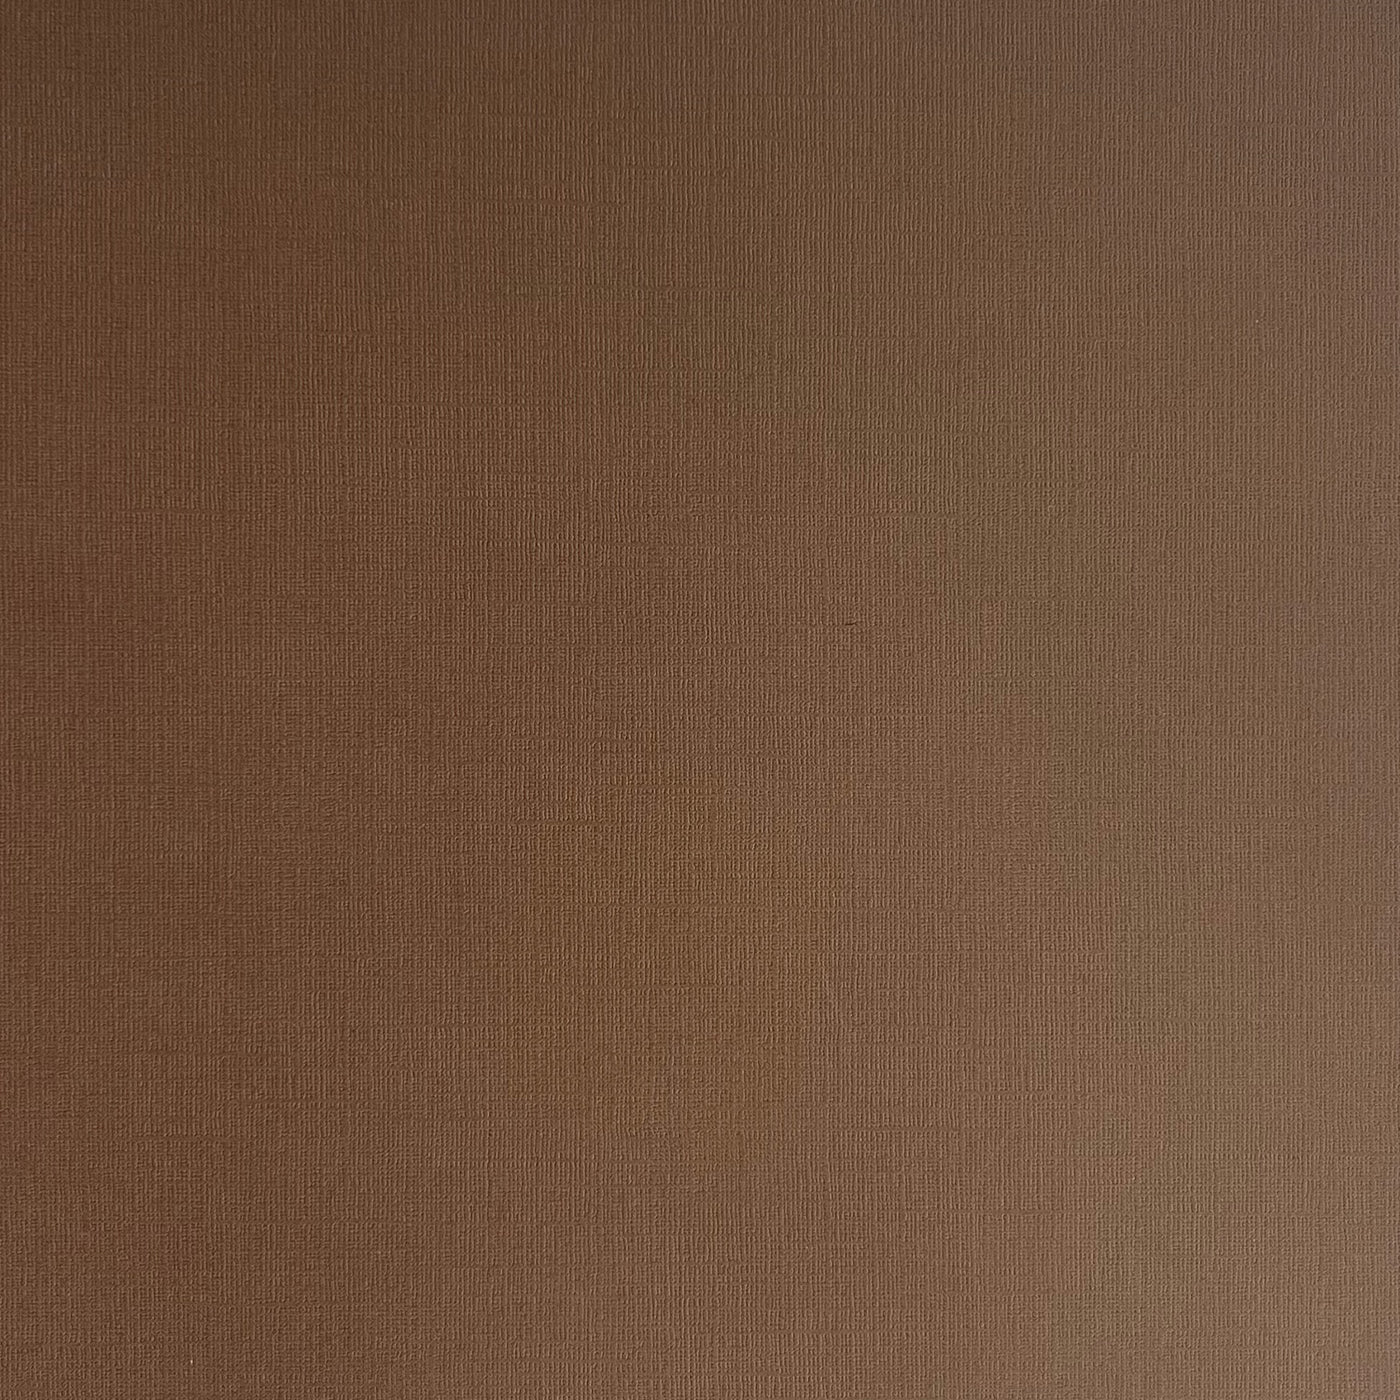 Cafe Au Lait - Textured 12x12 Cardstock - coffee brown canvas scrapbook paper